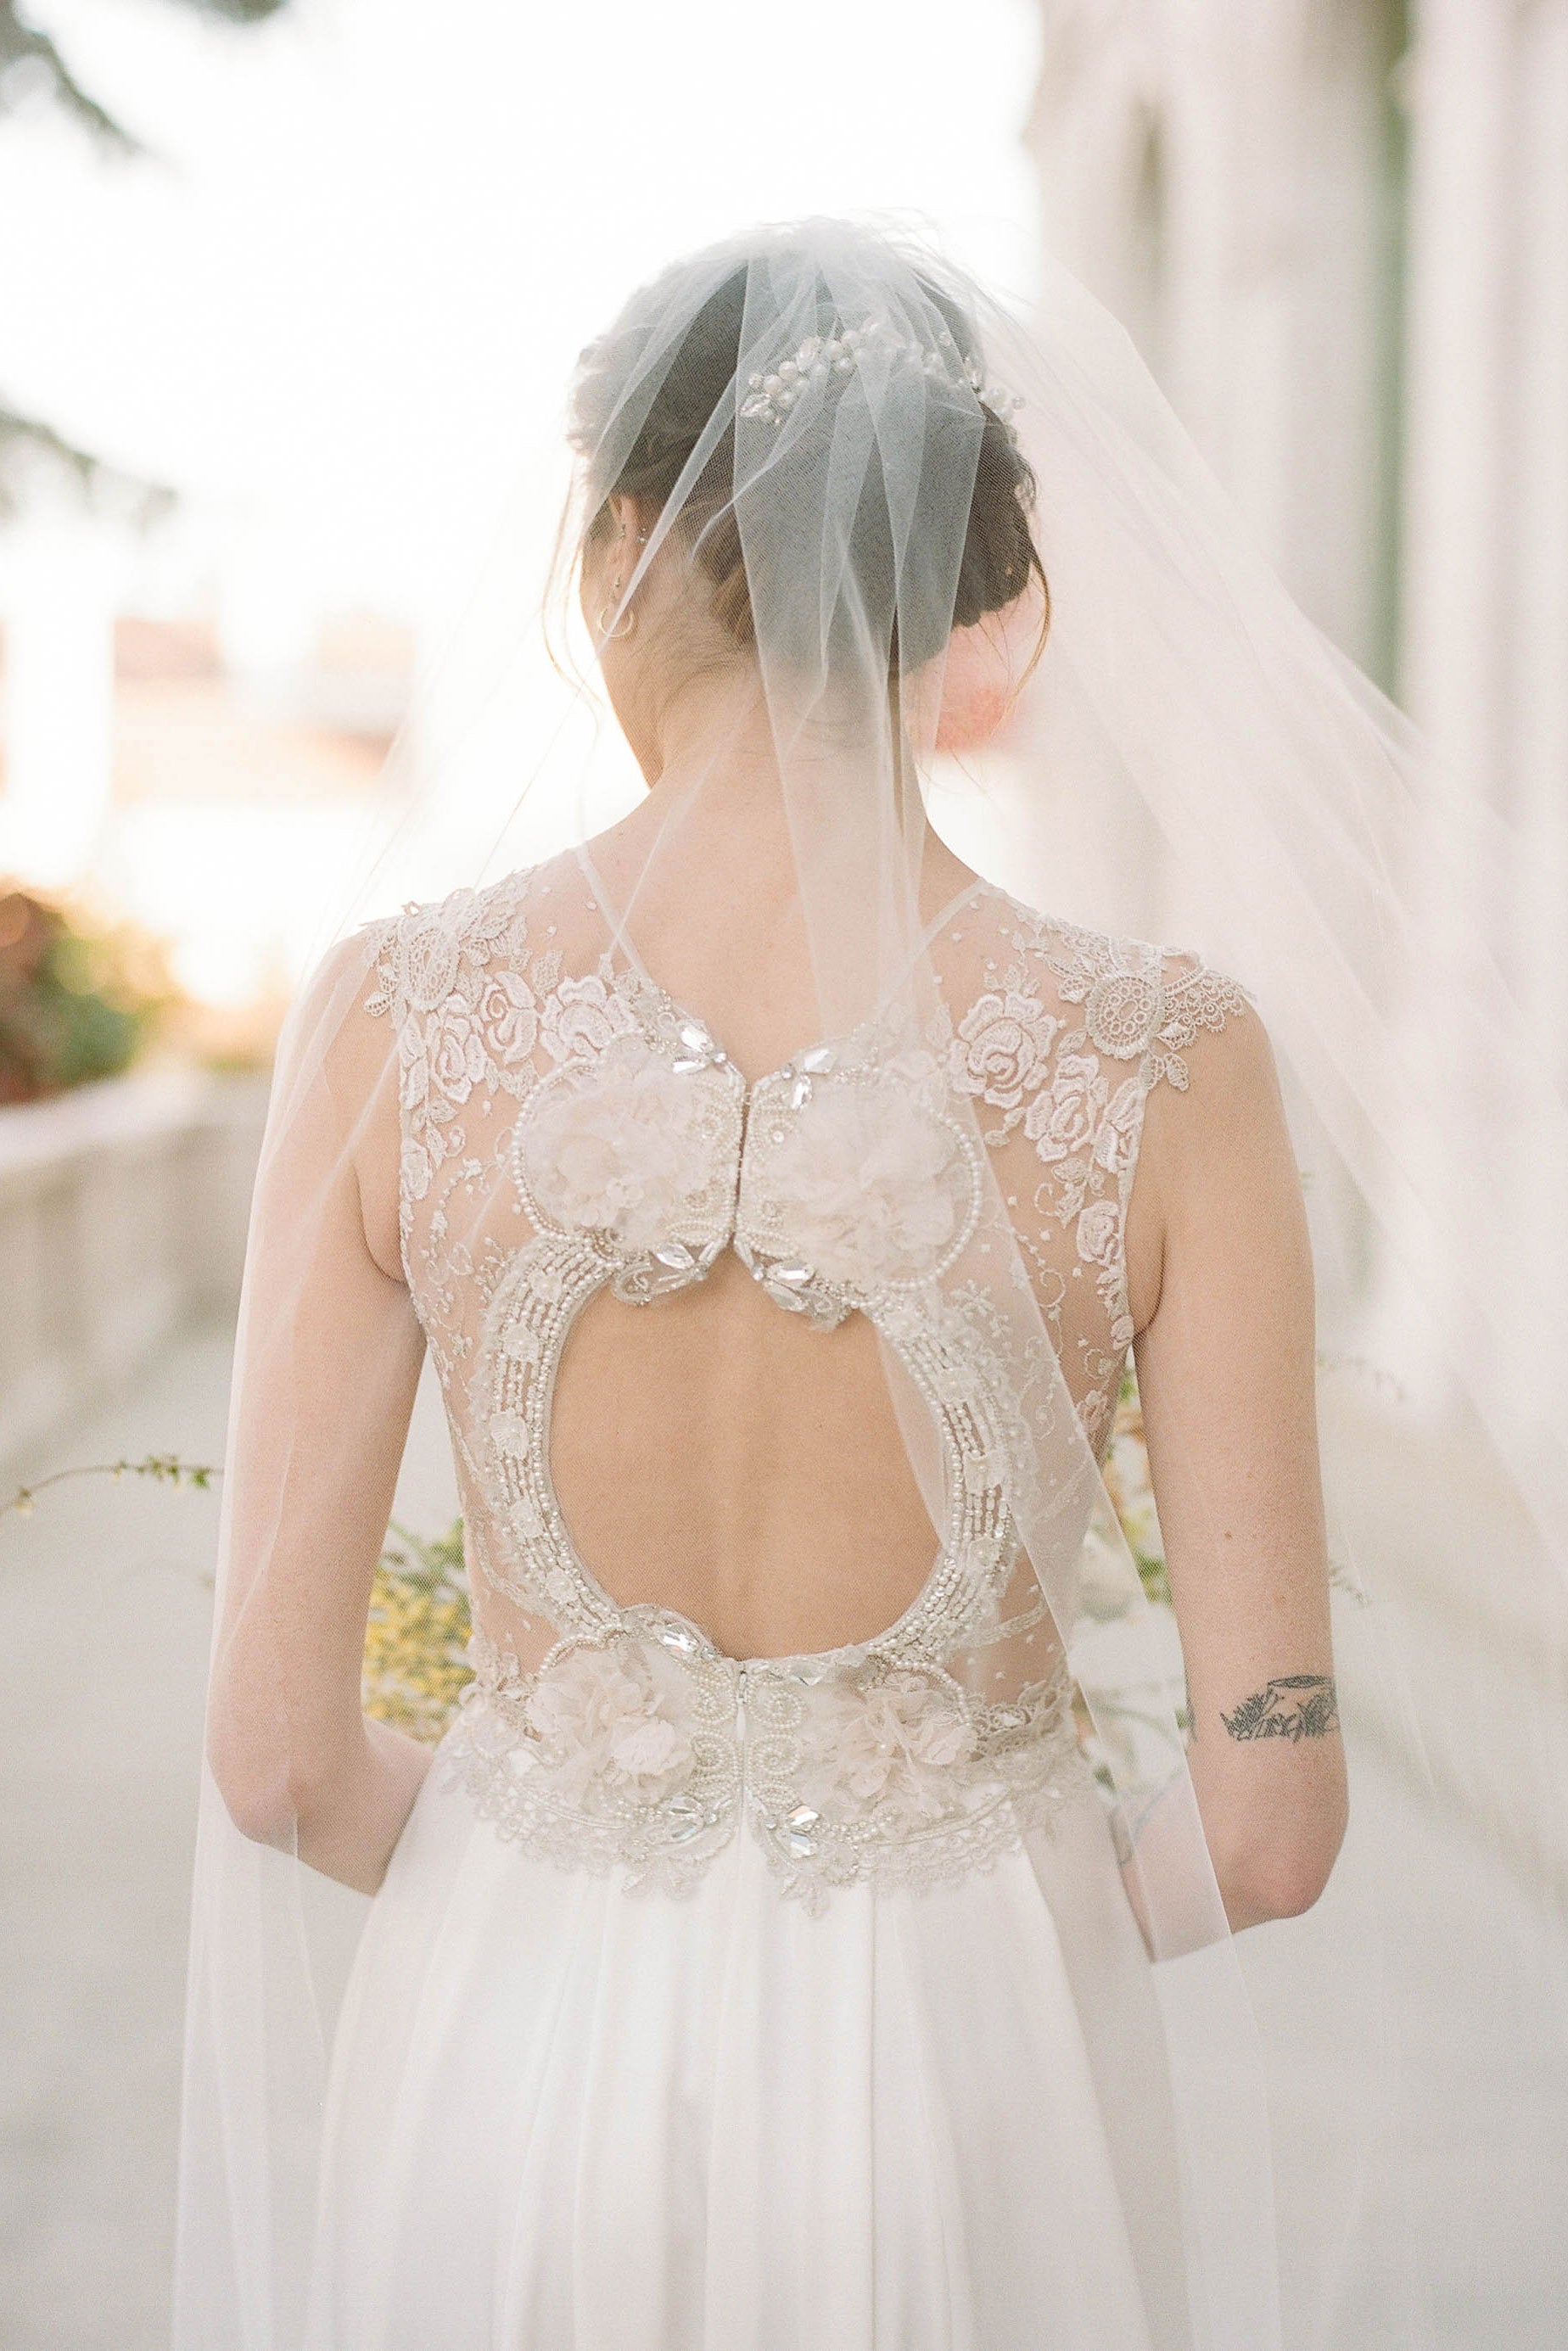 Historic Architecture & Romantic Wedding Dresses